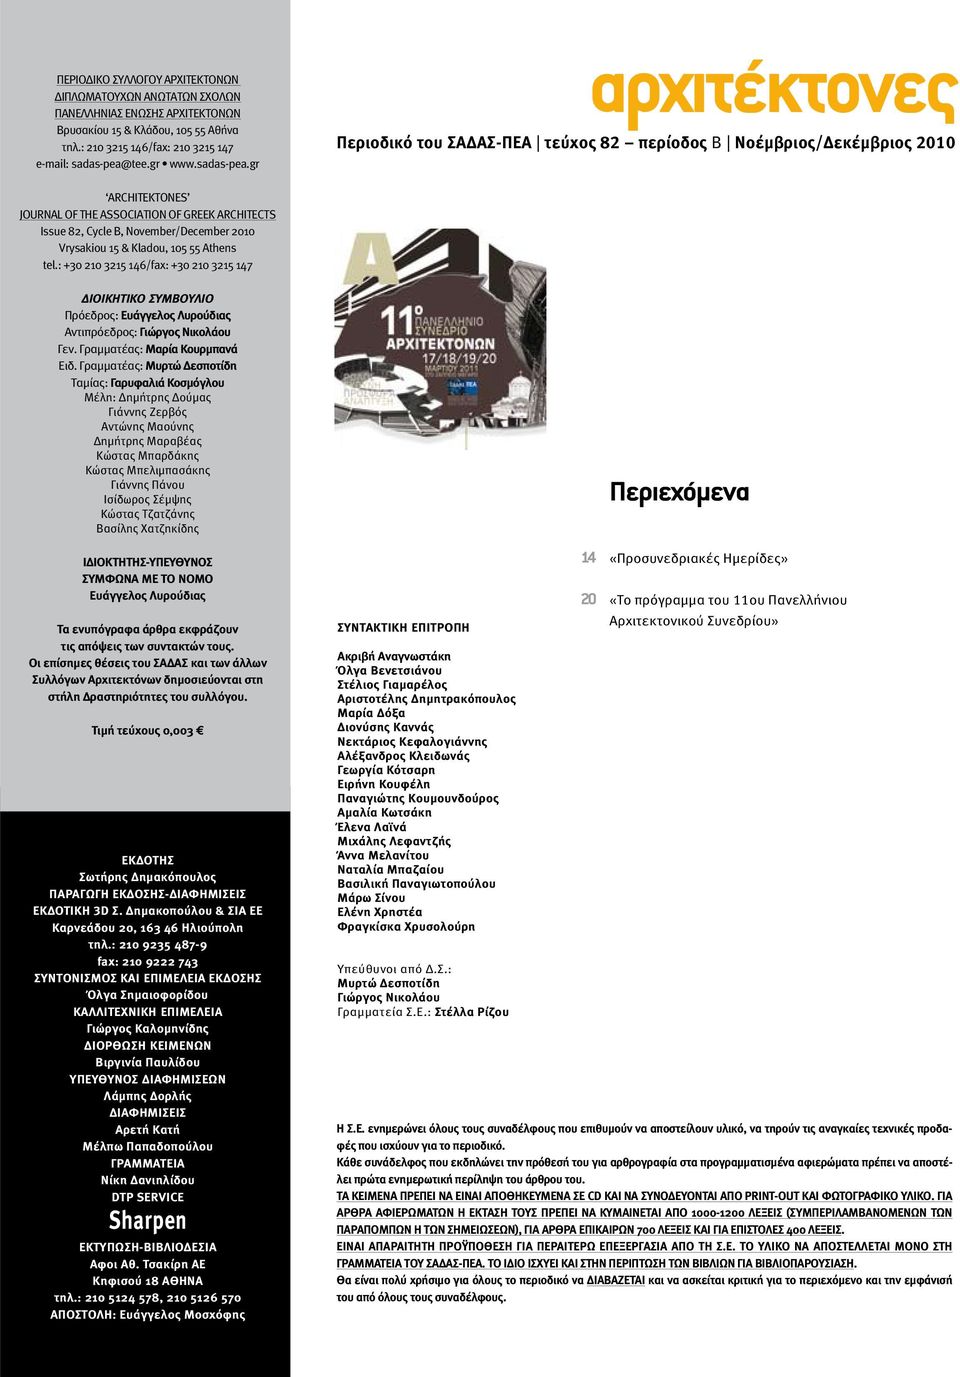 gr αρχιτέκτονες Περιοδικό του ΣΑΔΑΣ-ΠΕΑ τεύχος 82 περίοδος Β Νοέμβριος/Δεκέμβριος 2010 ARCHITEKTONES JOURNAL OF THE ASSOCIATION OF GREEK ARCHITECTS Issue 82, Cycle Β, November/December 2010 Vrysakiou